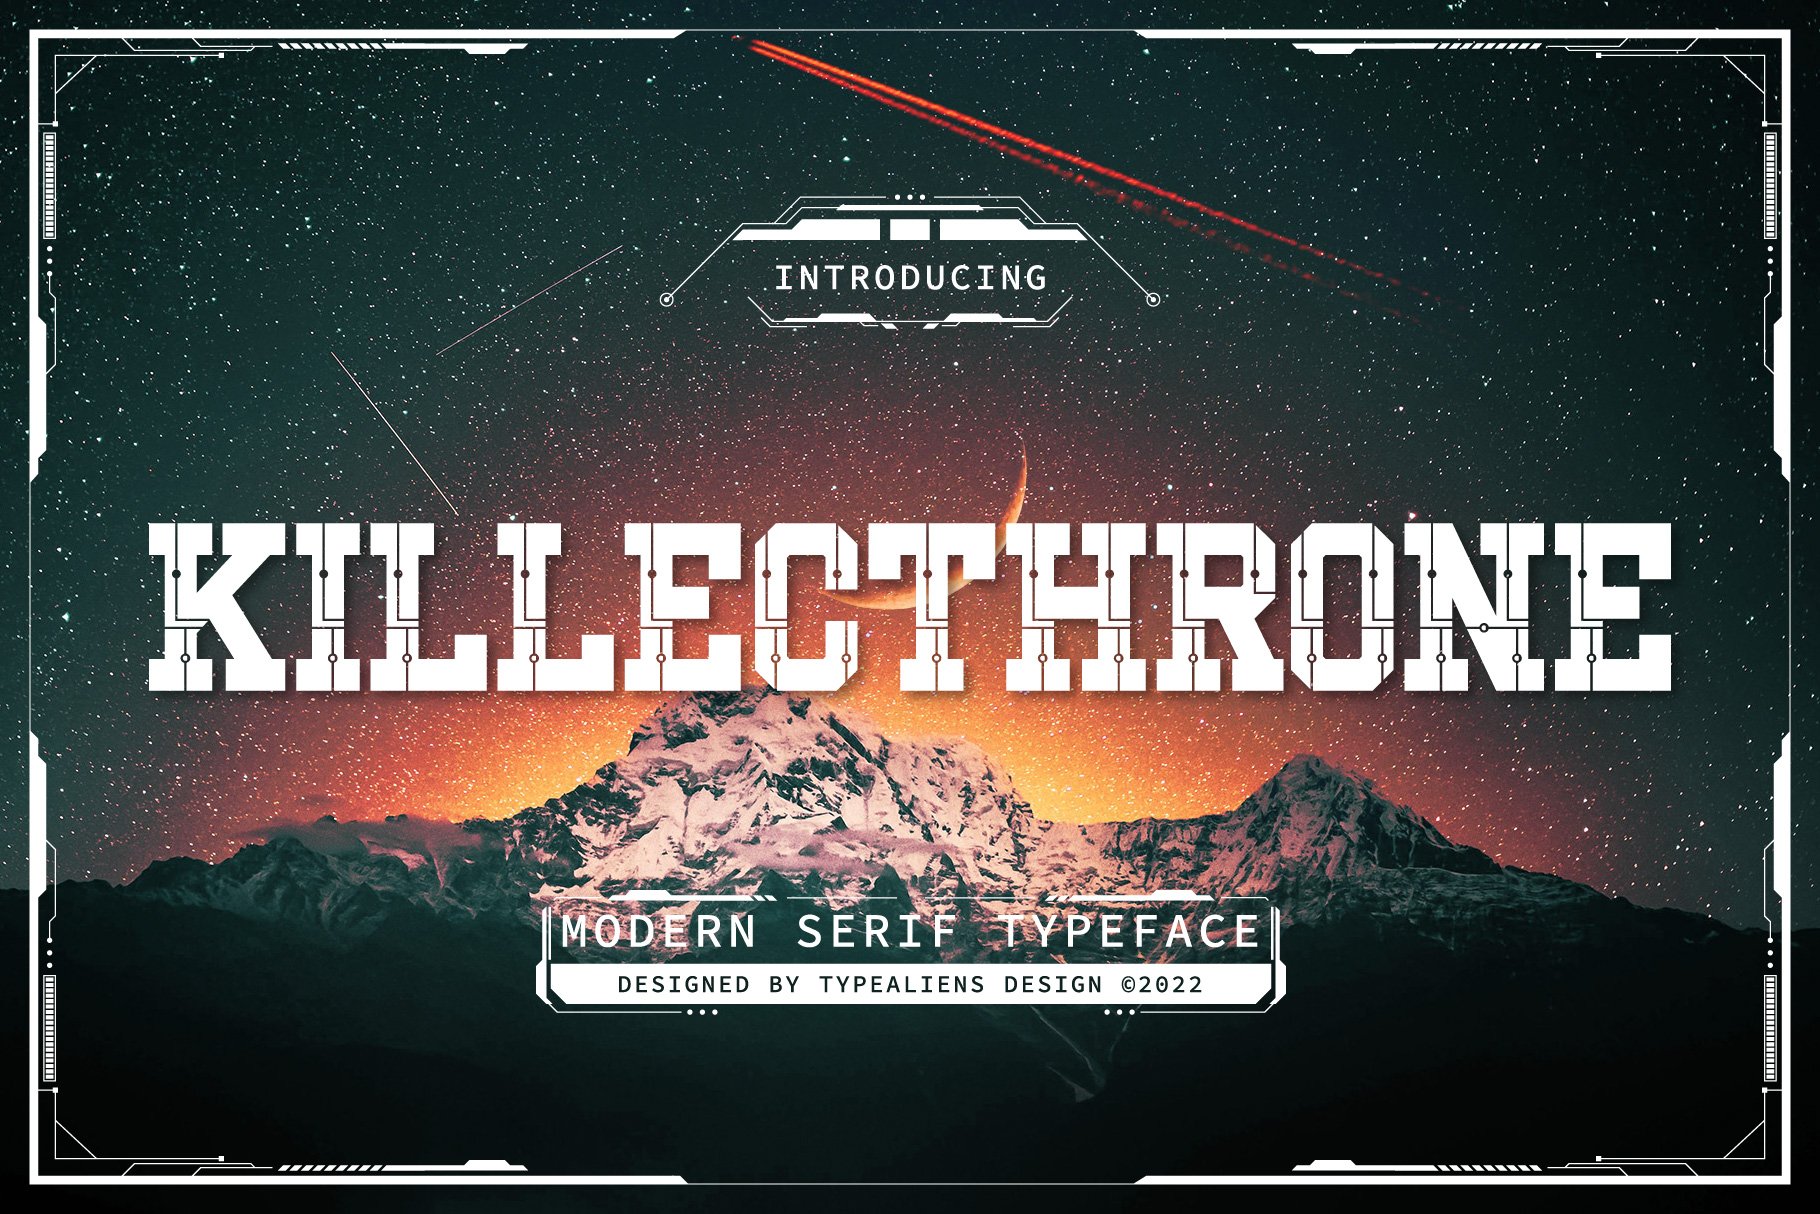 Killecthrone cover image.